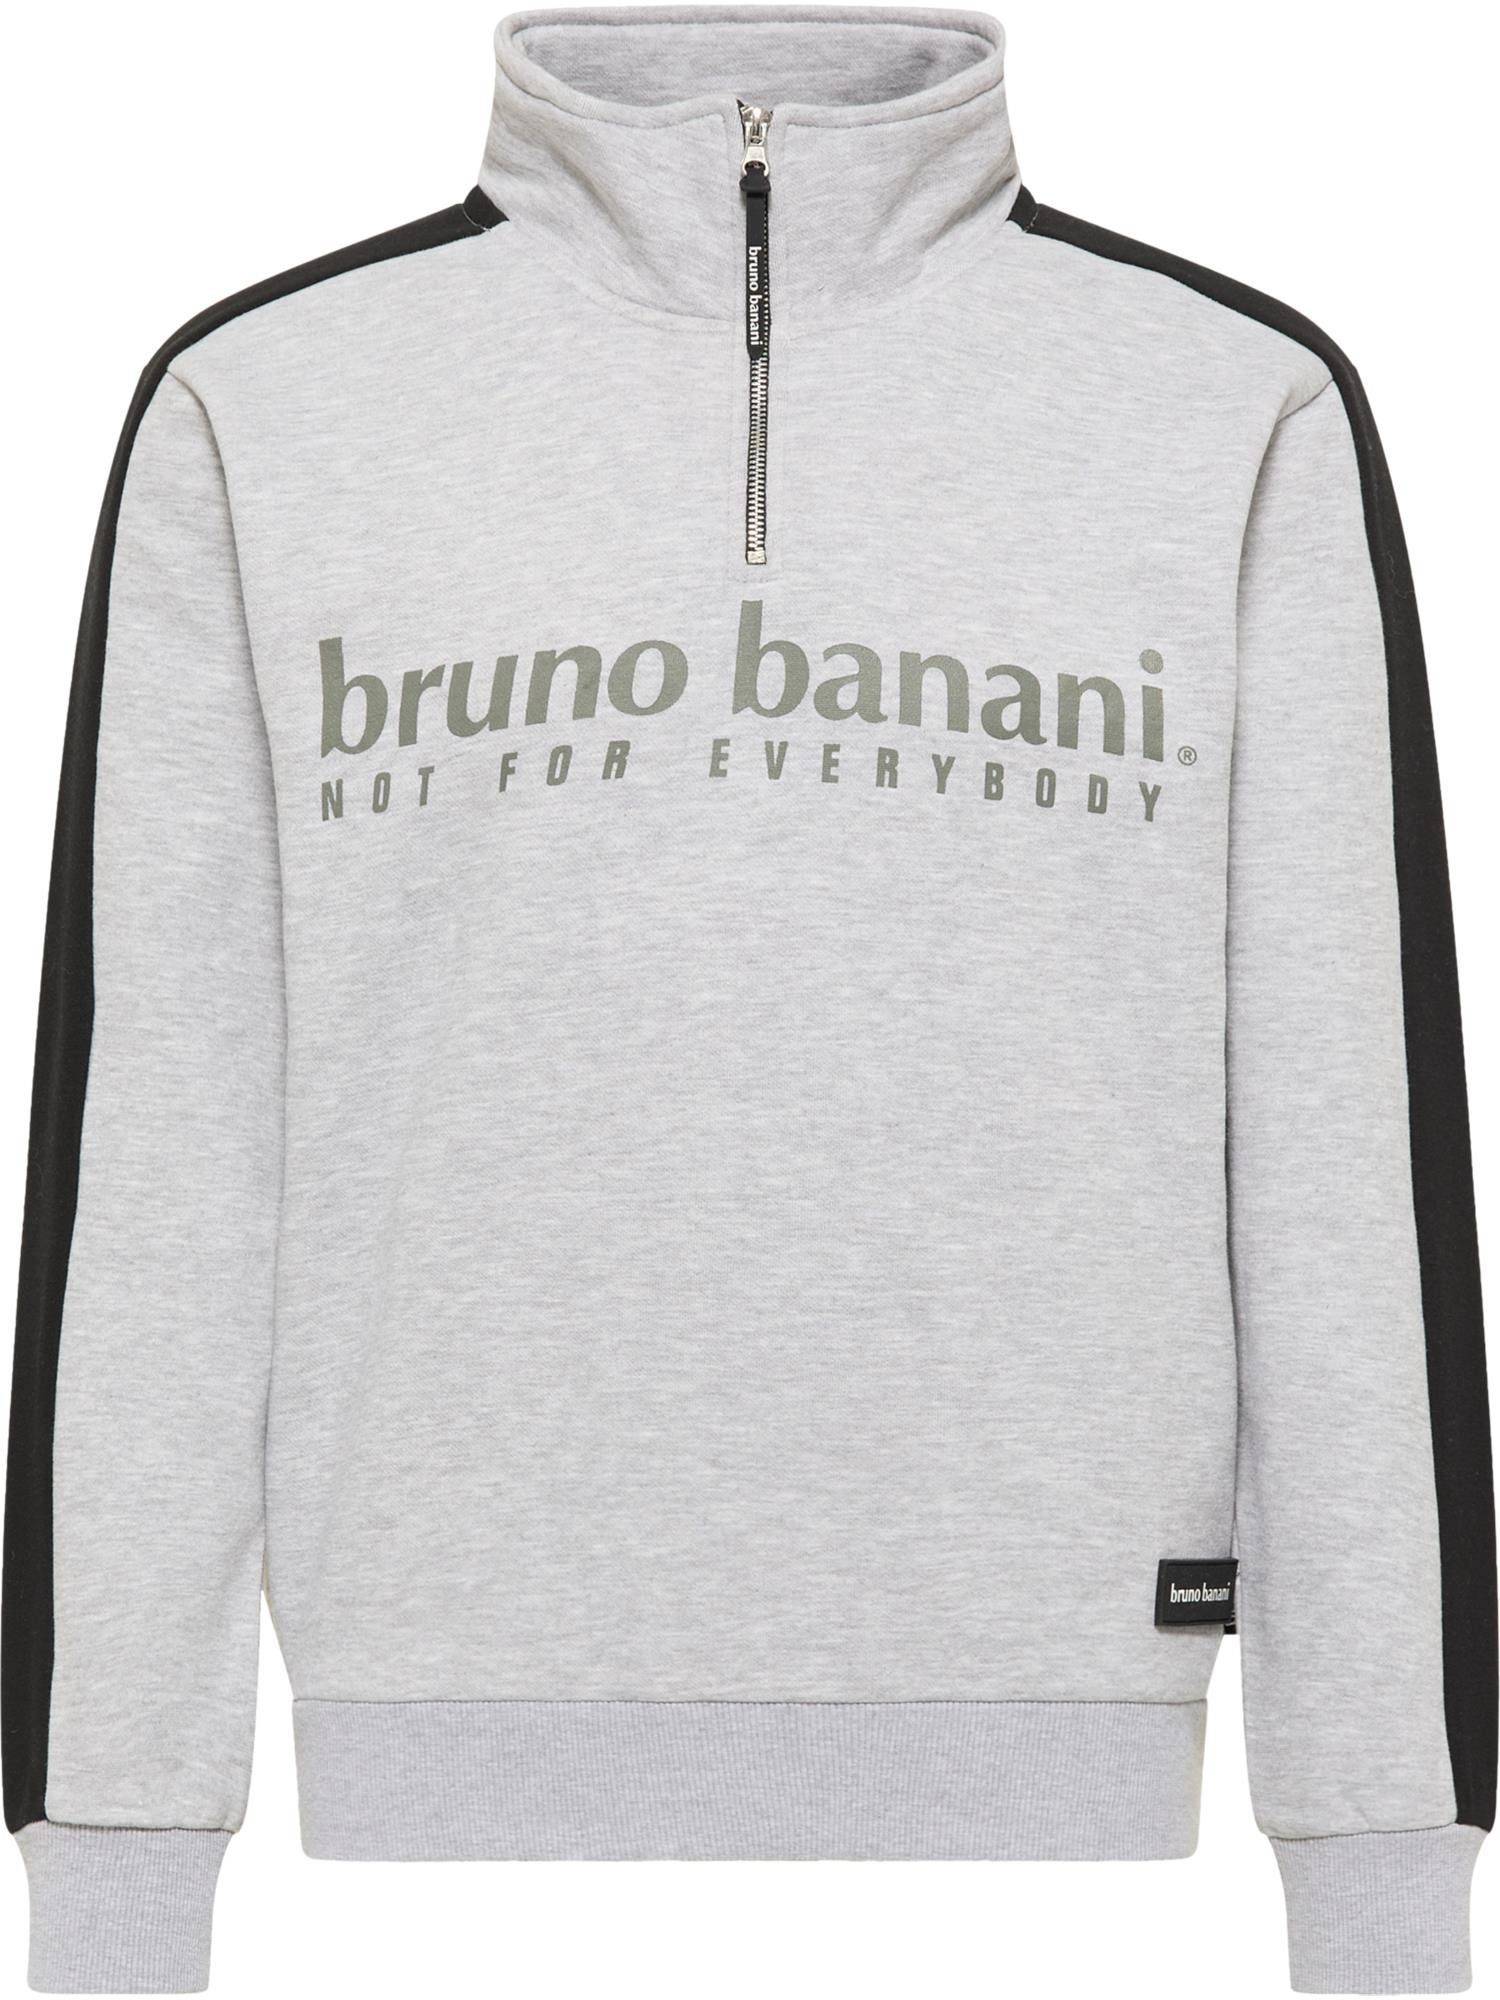 Sweatshirt ANTHONY Banani Bruno